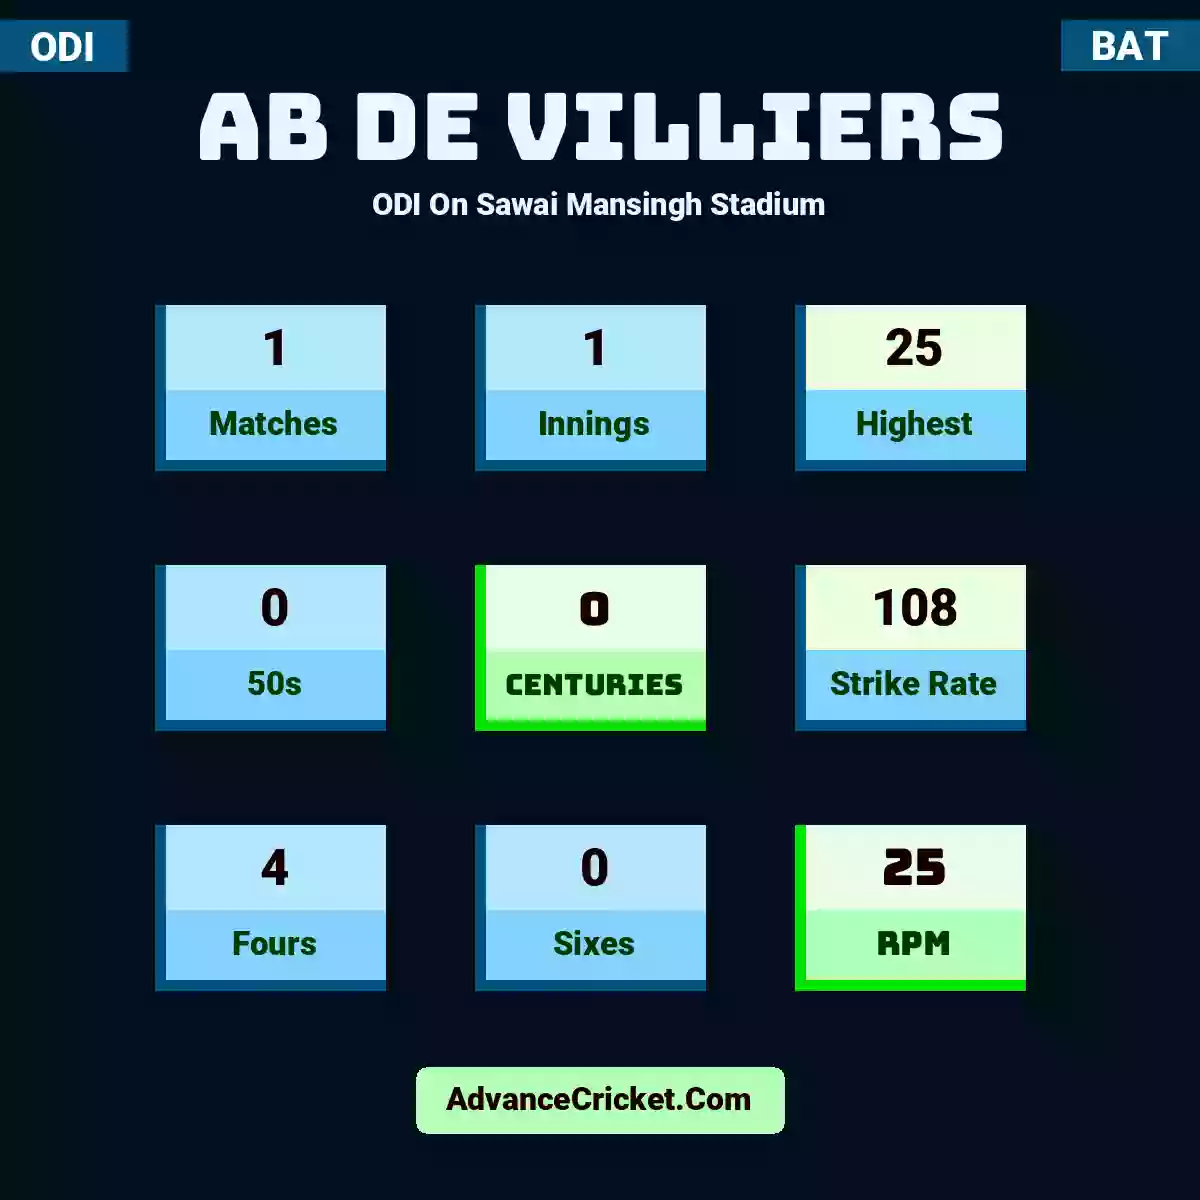 AB de Villiers ODI  On Sawai Mansingh Stadium, AB de Villiers played 1 matches, scored 25 runs as highest, 0 half-centuries, and 0 centuries, with a strike rate of 108. A.Villiers hit 4 fours and 0 sixes, with an RPM of 25.